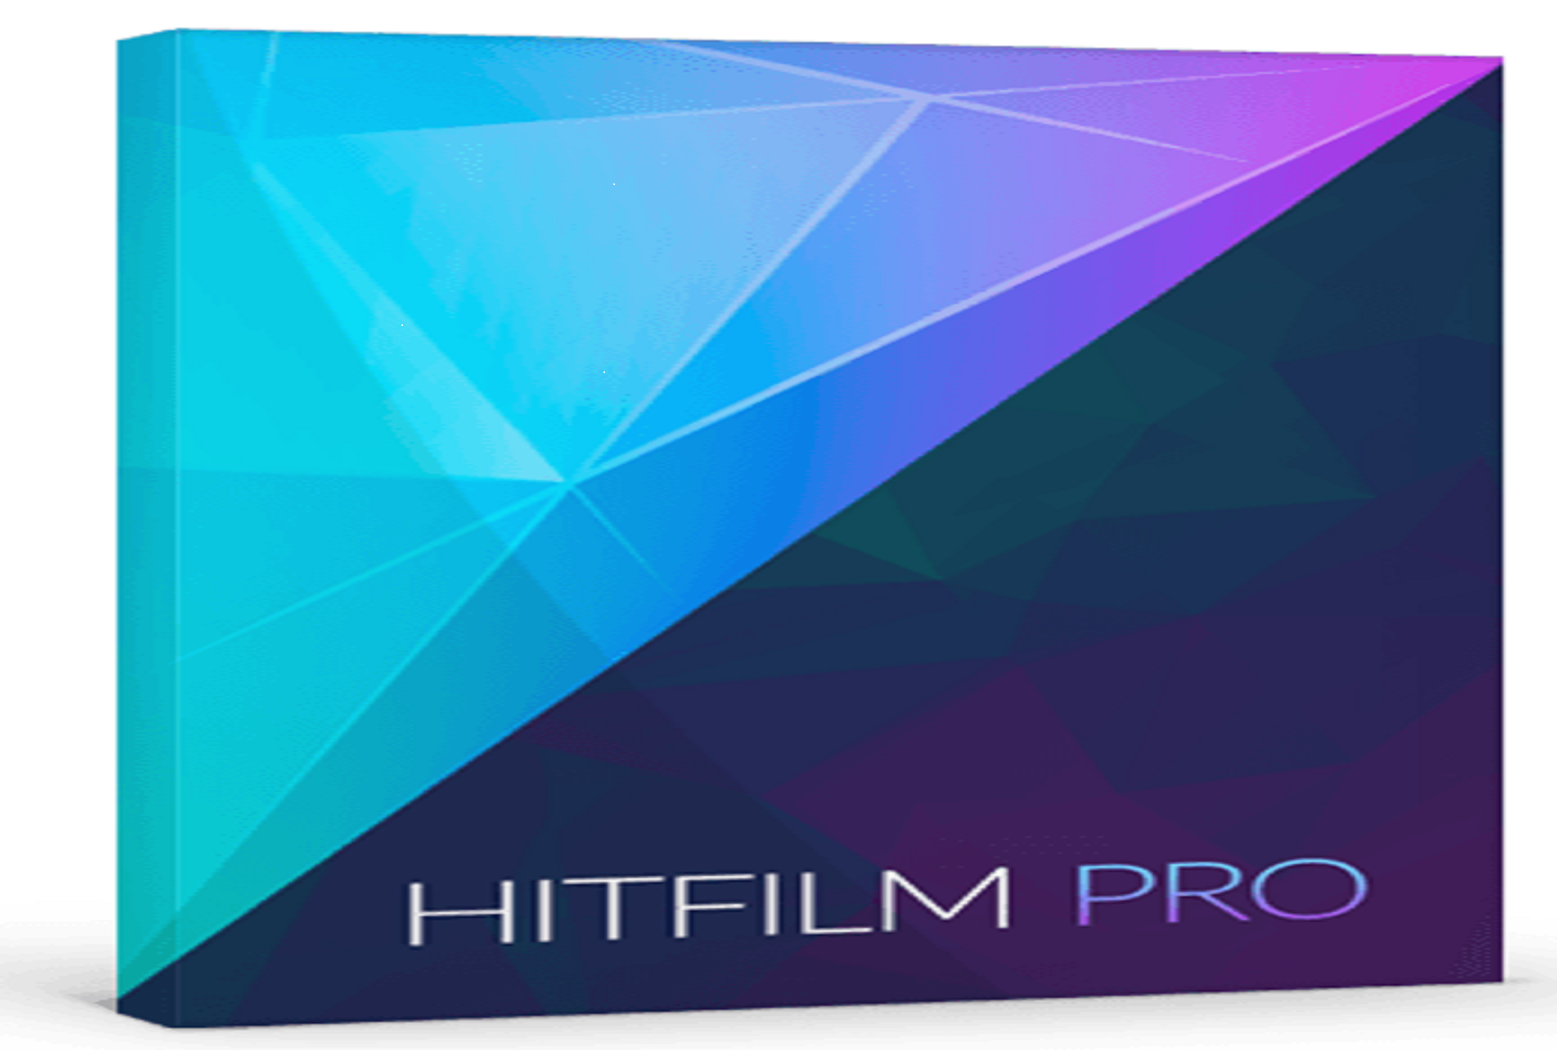 HitFilm Pro Crack